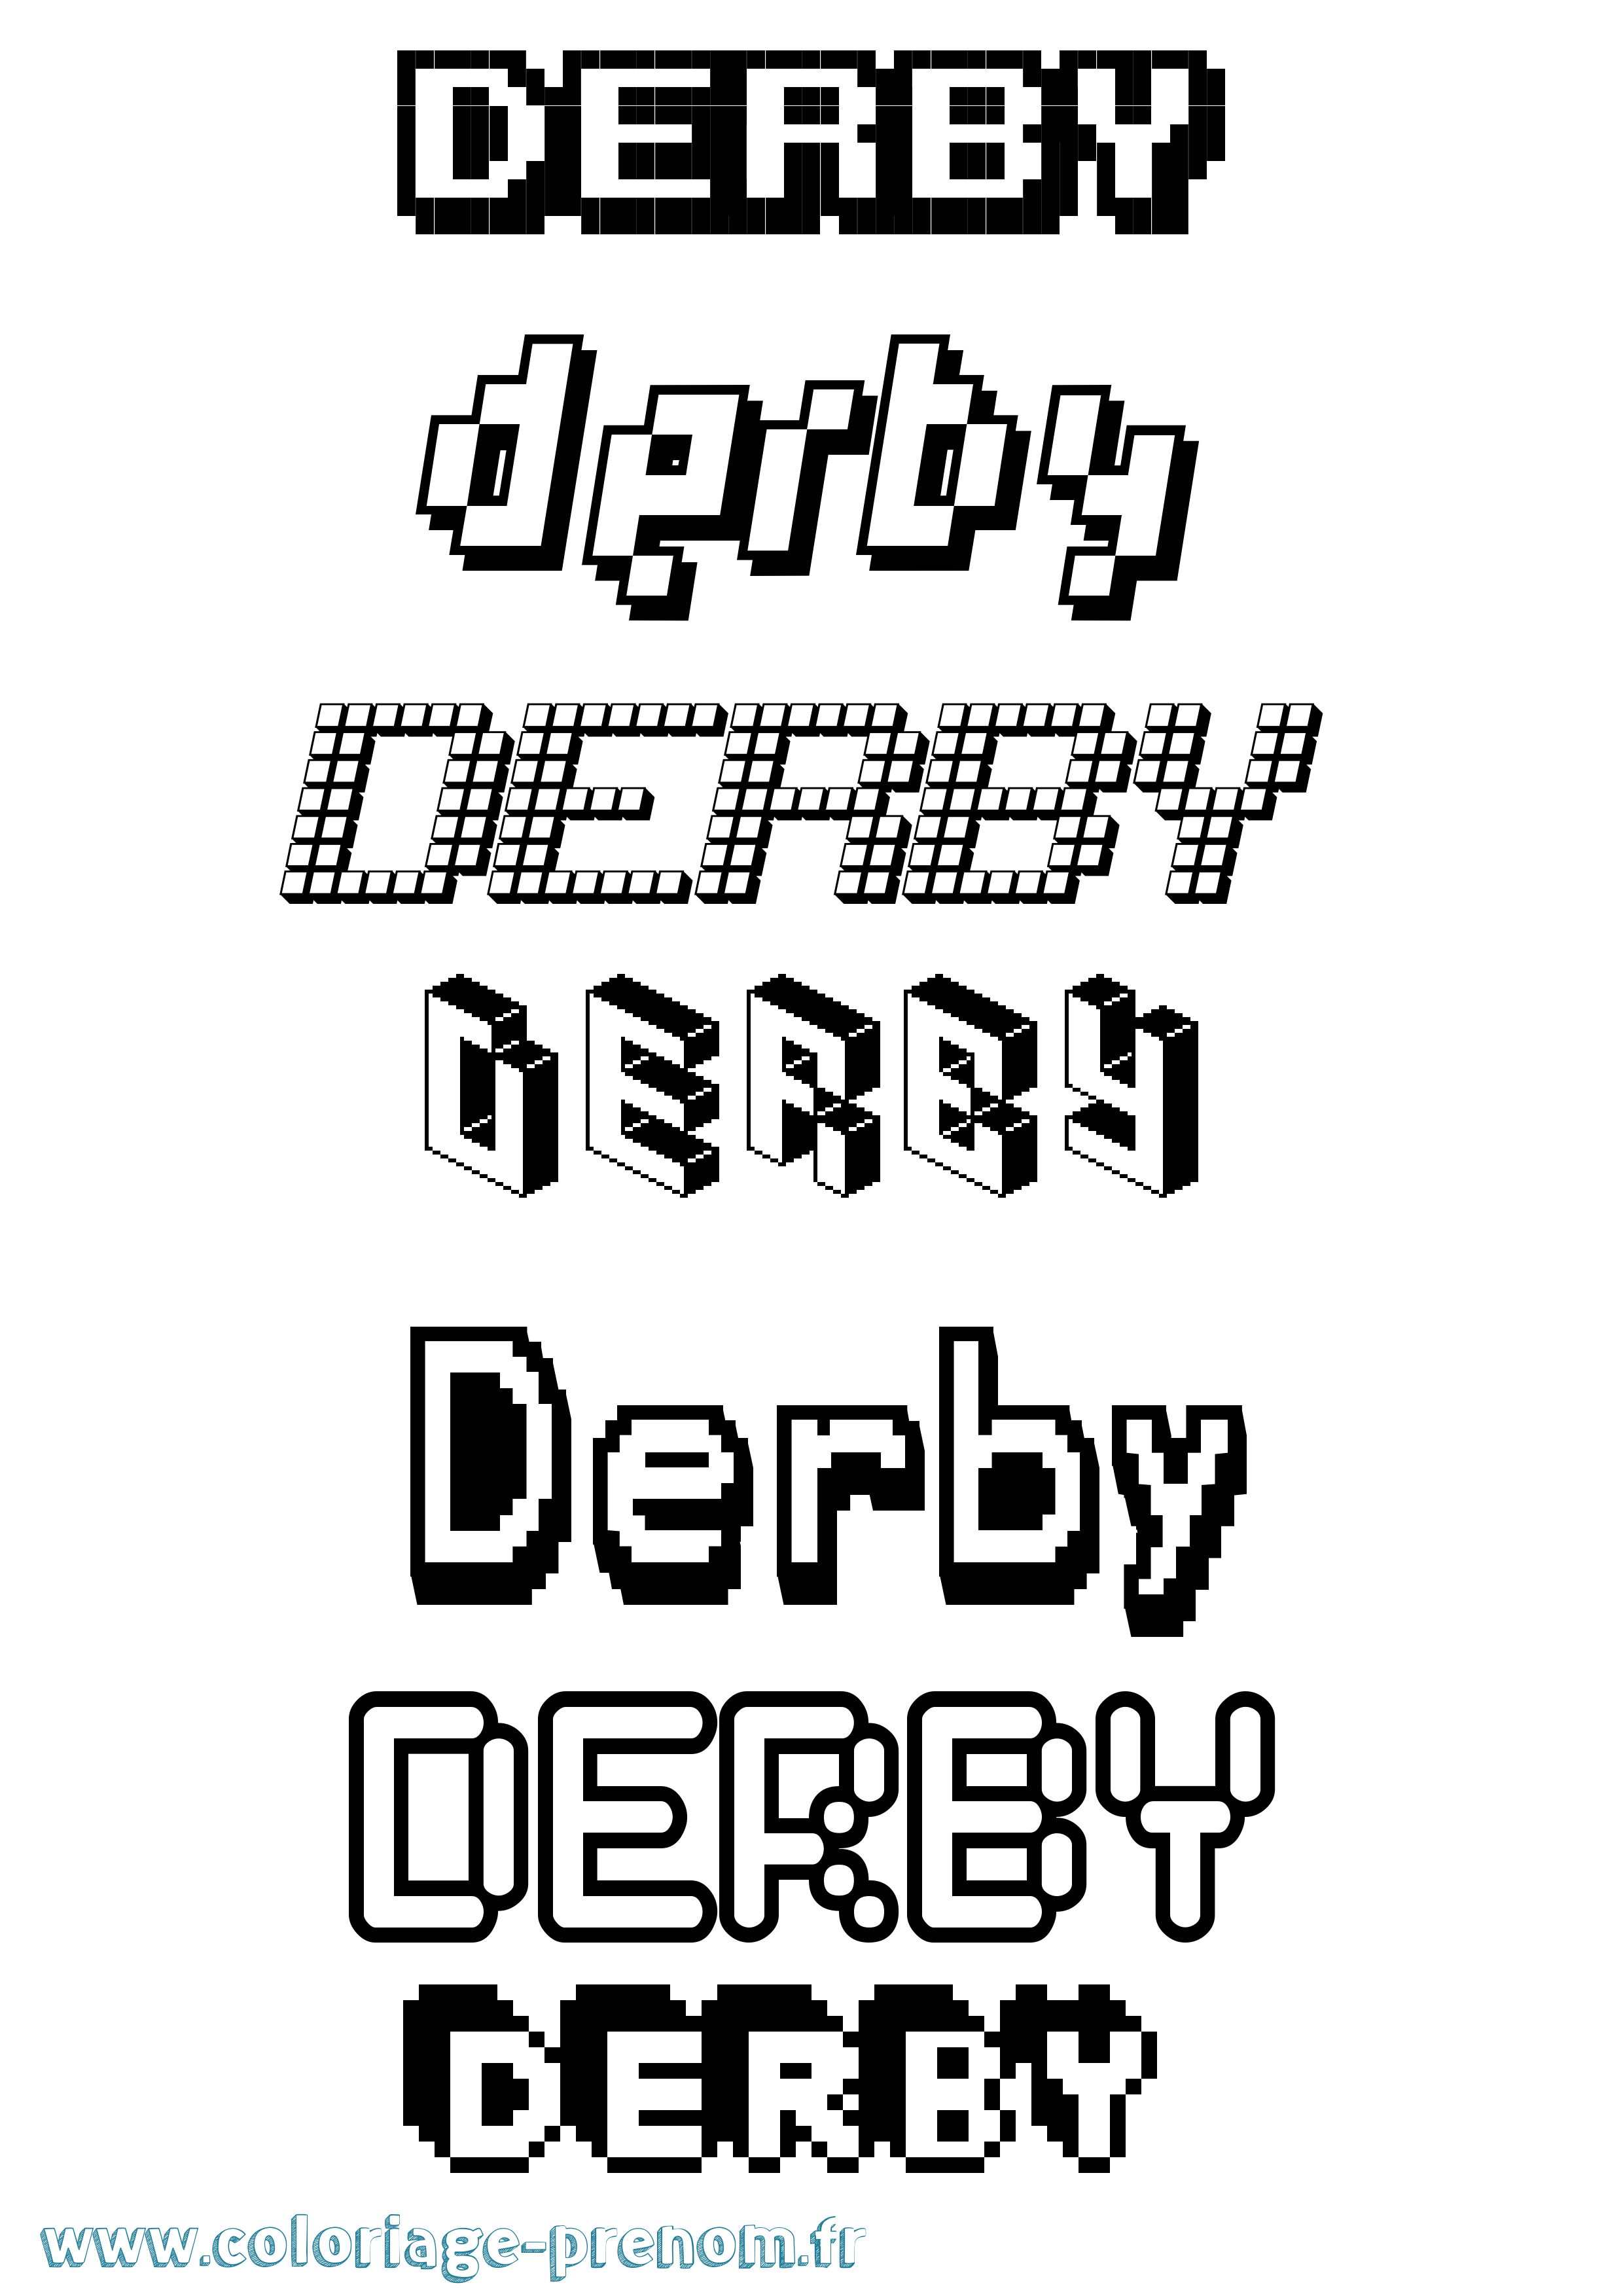 Coloriage prénom Derby Pixel